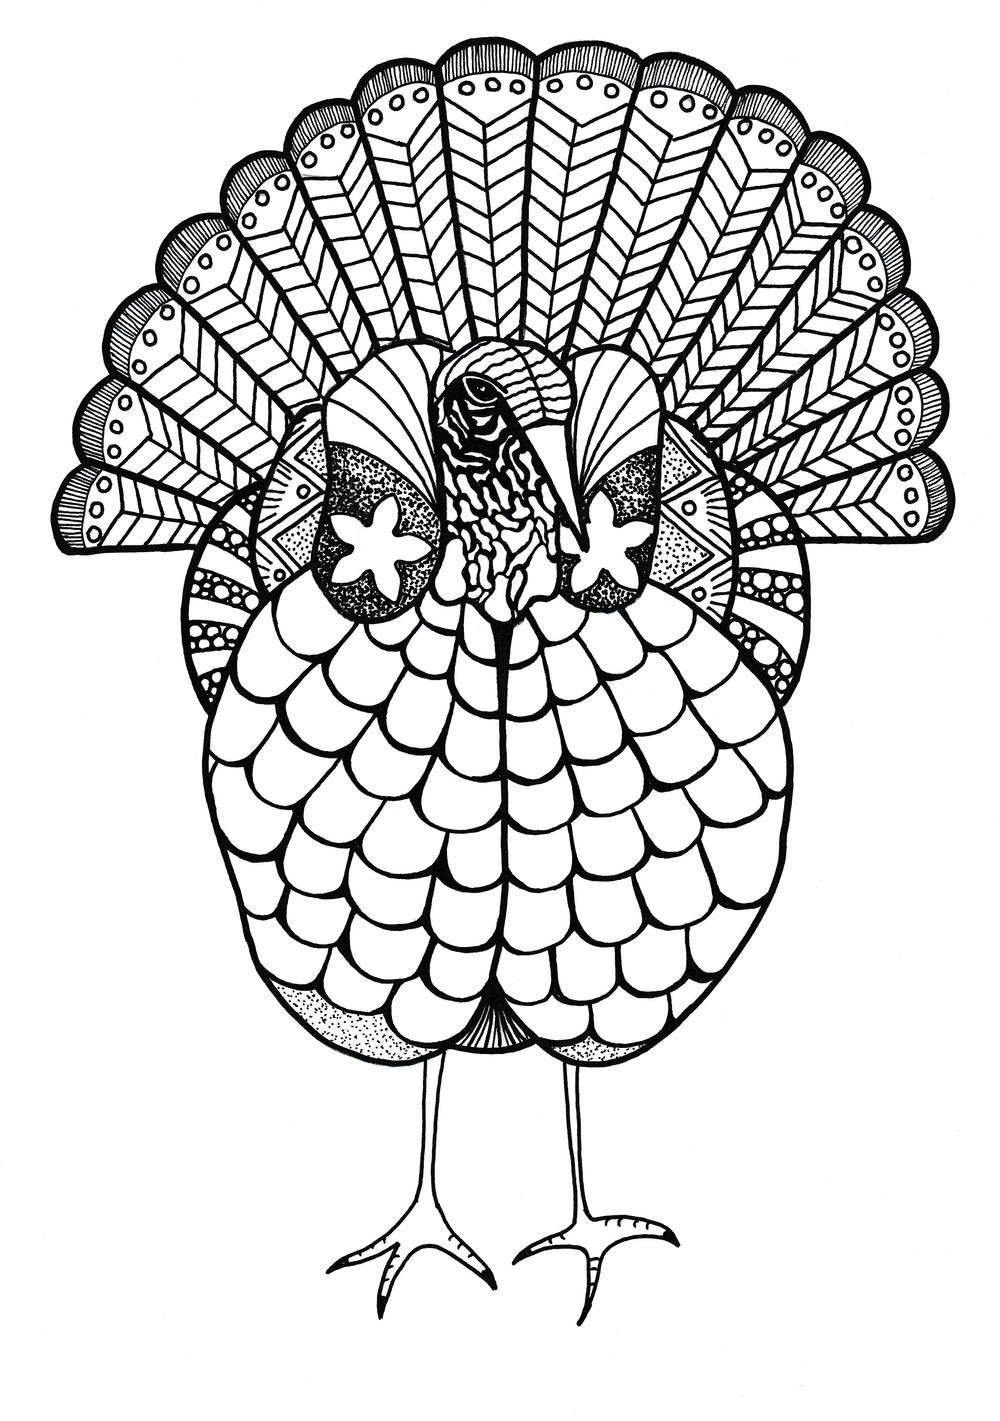 Download Colorful Turkey Adult Coloring Page | FaveCrafts.com